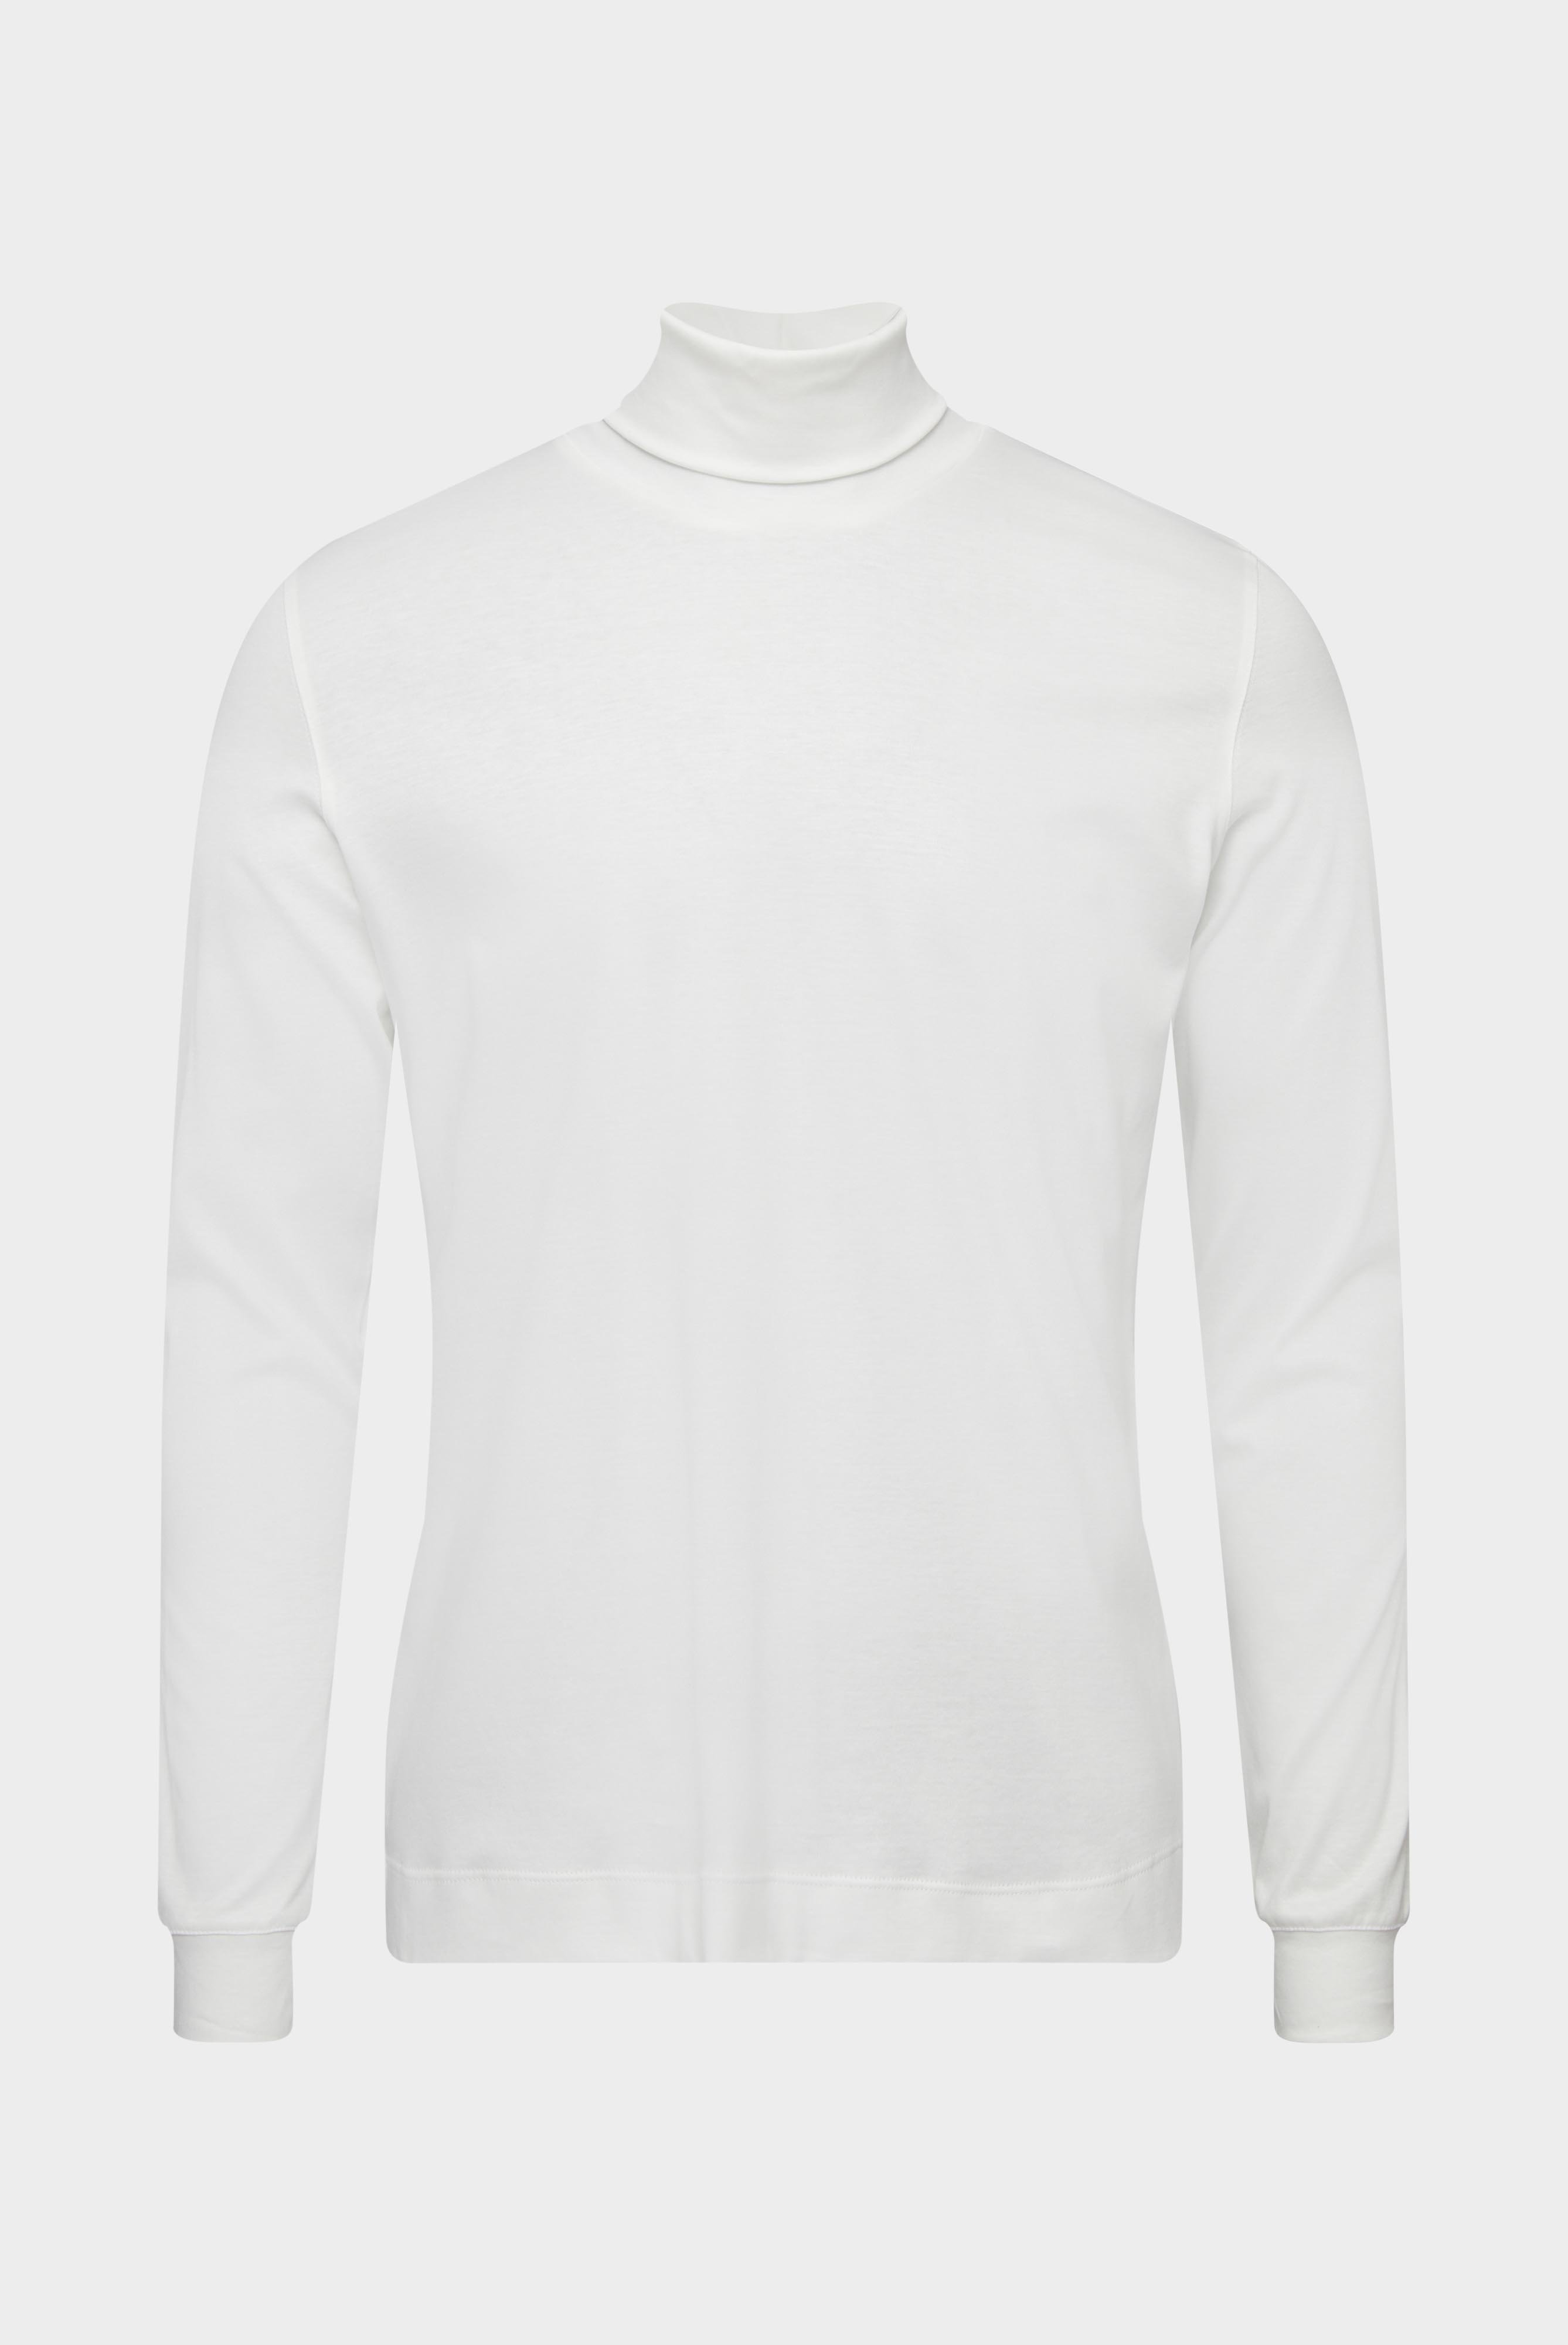 T-Shirts+Swiss Cotton Jersey Turtleneck Shirt+20.1719.UX.180031.100.S